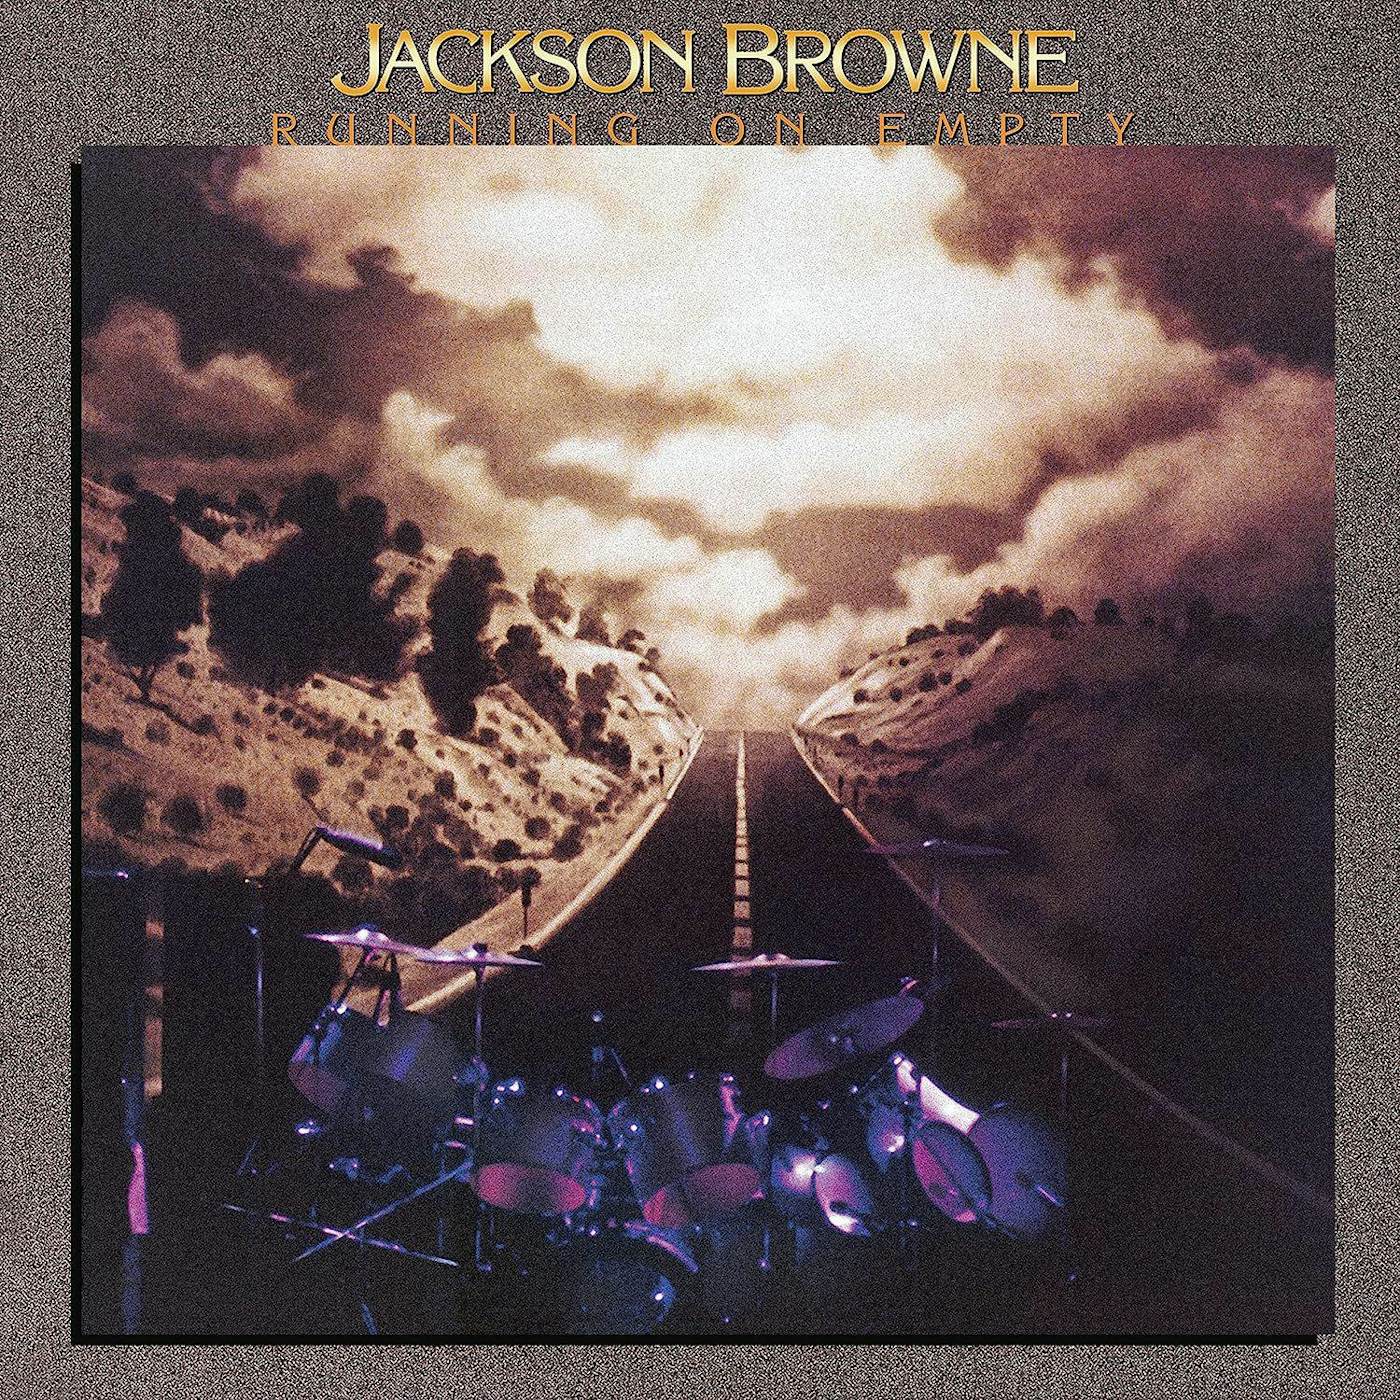 Jackson Browne Running On Empty Vinyl Record